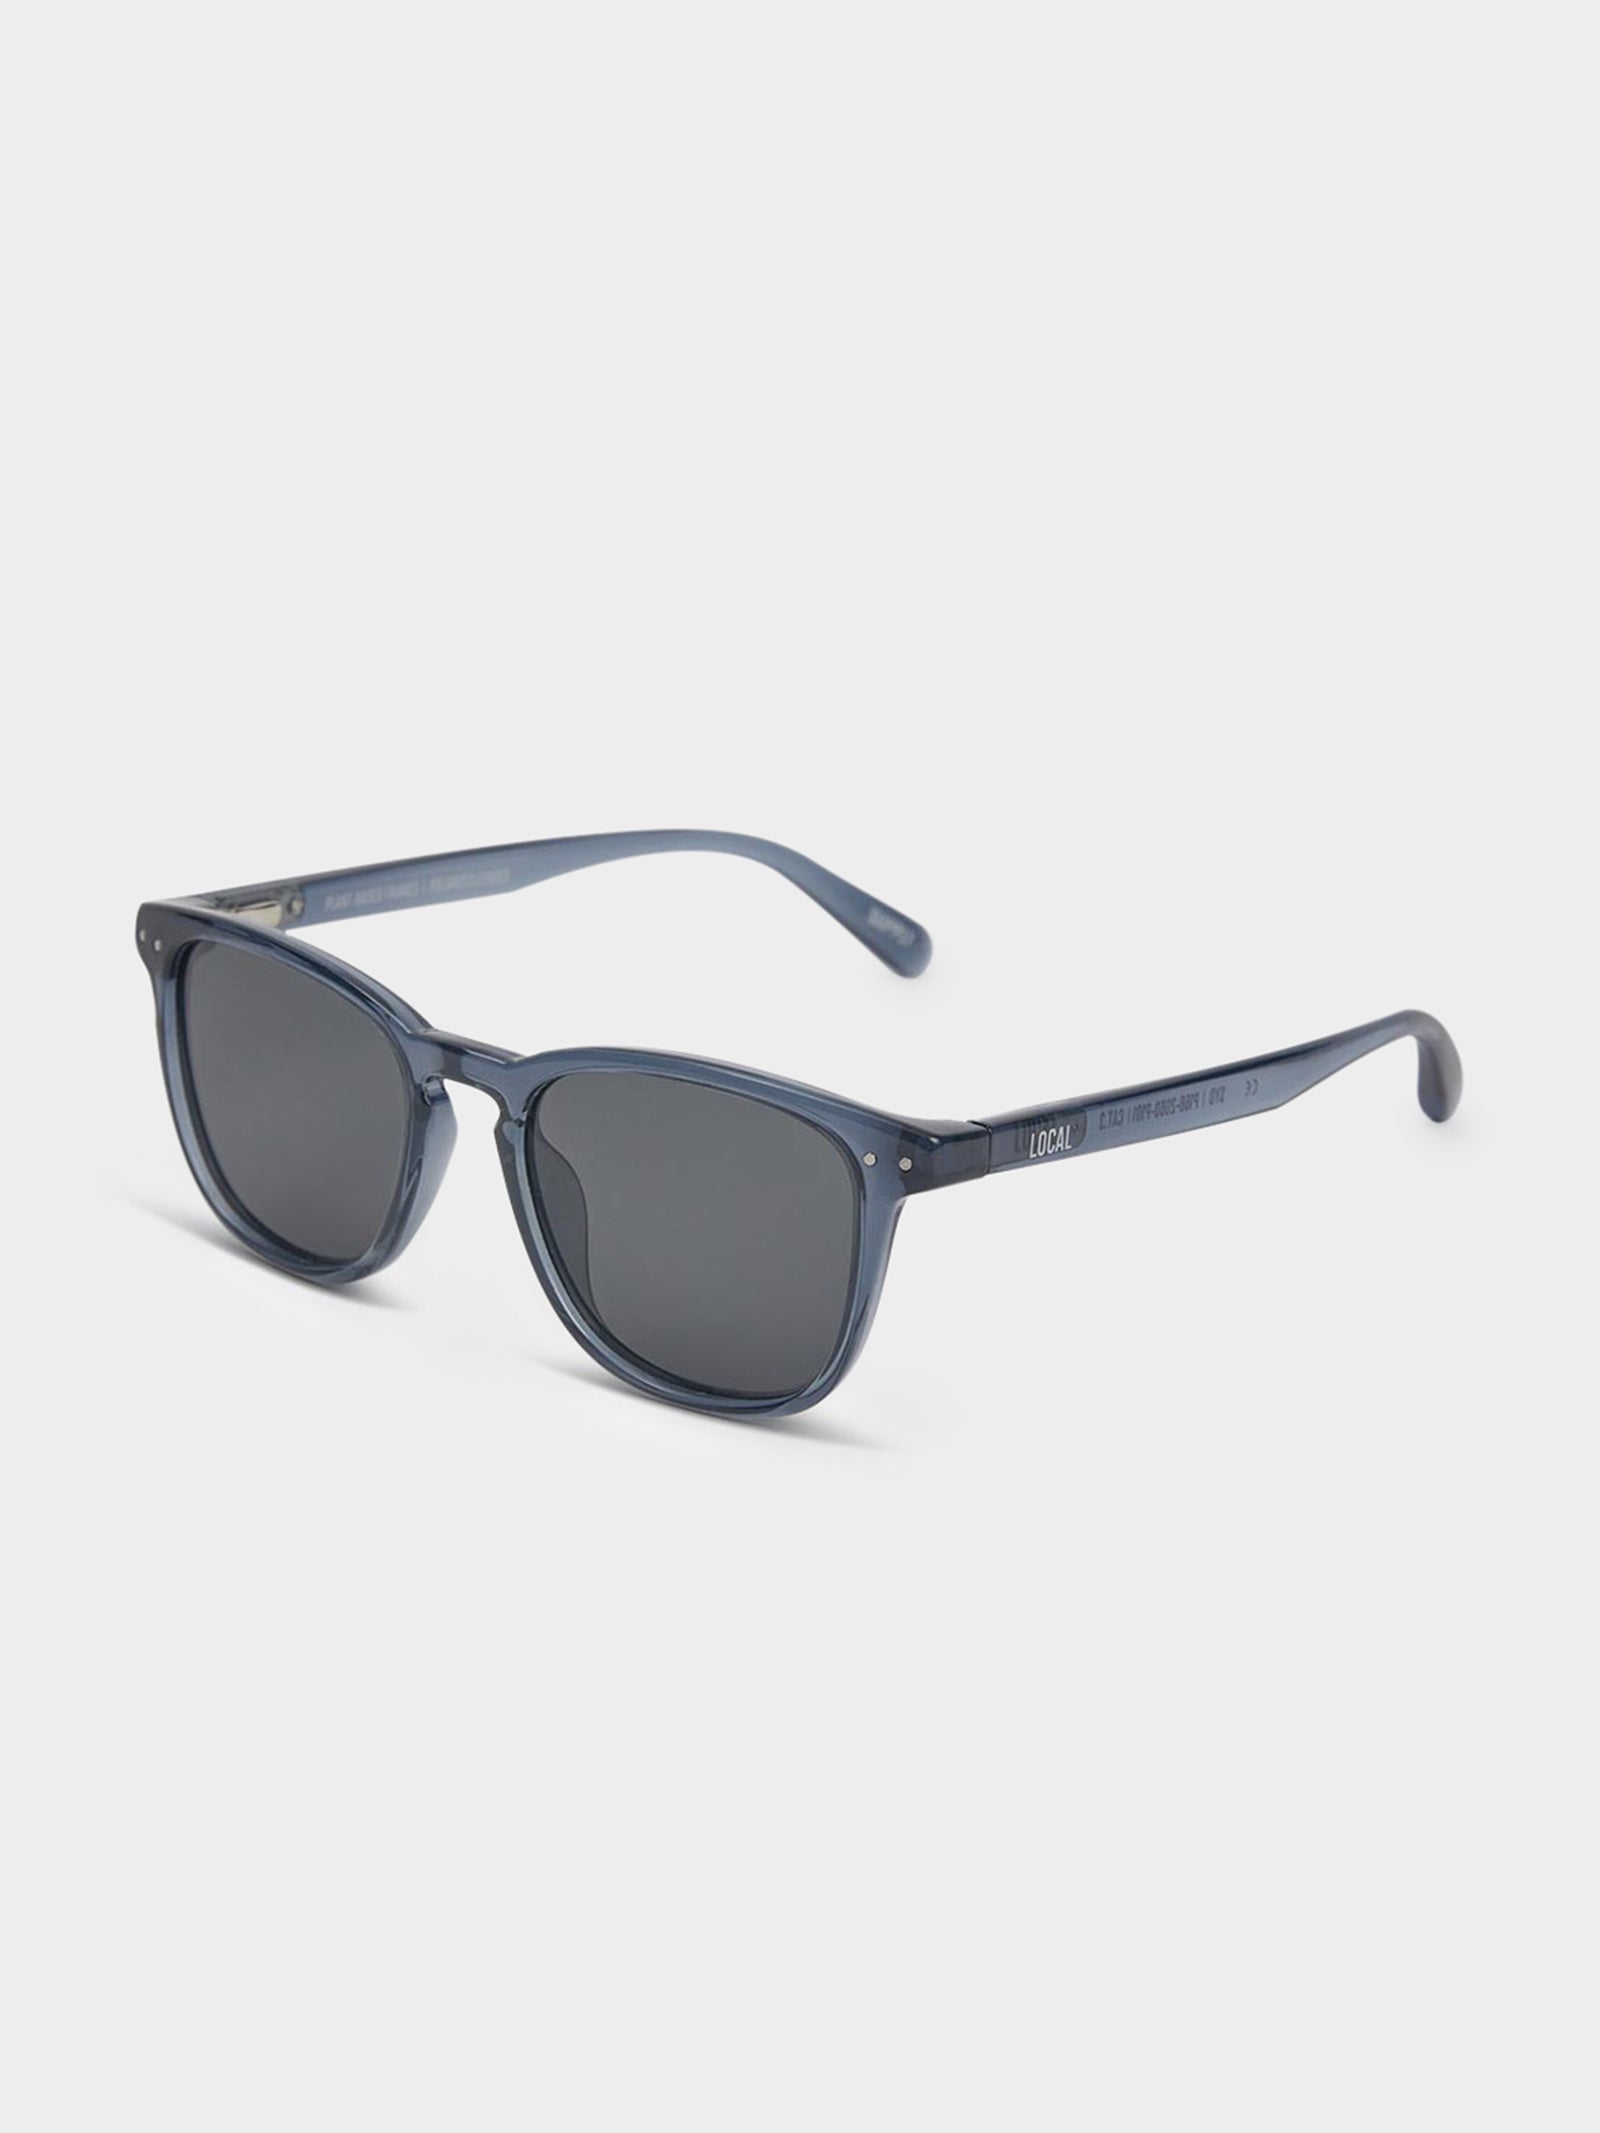 Per Polished Sunglasses in Navy & Dark Grey